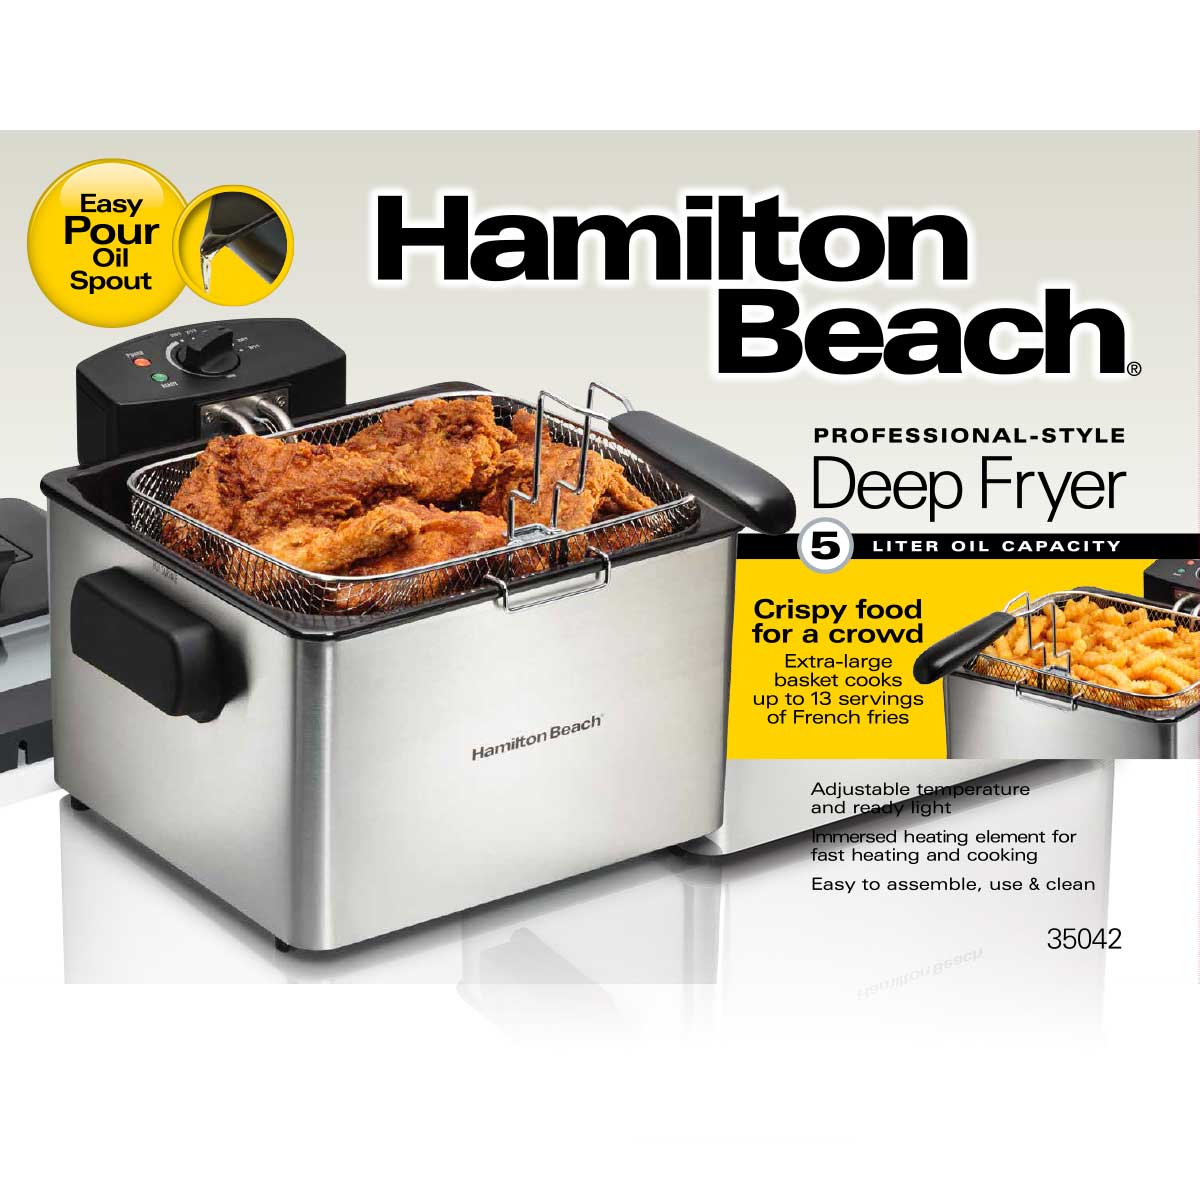 professional Restaurant Style Deep Fryer Hamilton Beach Review 